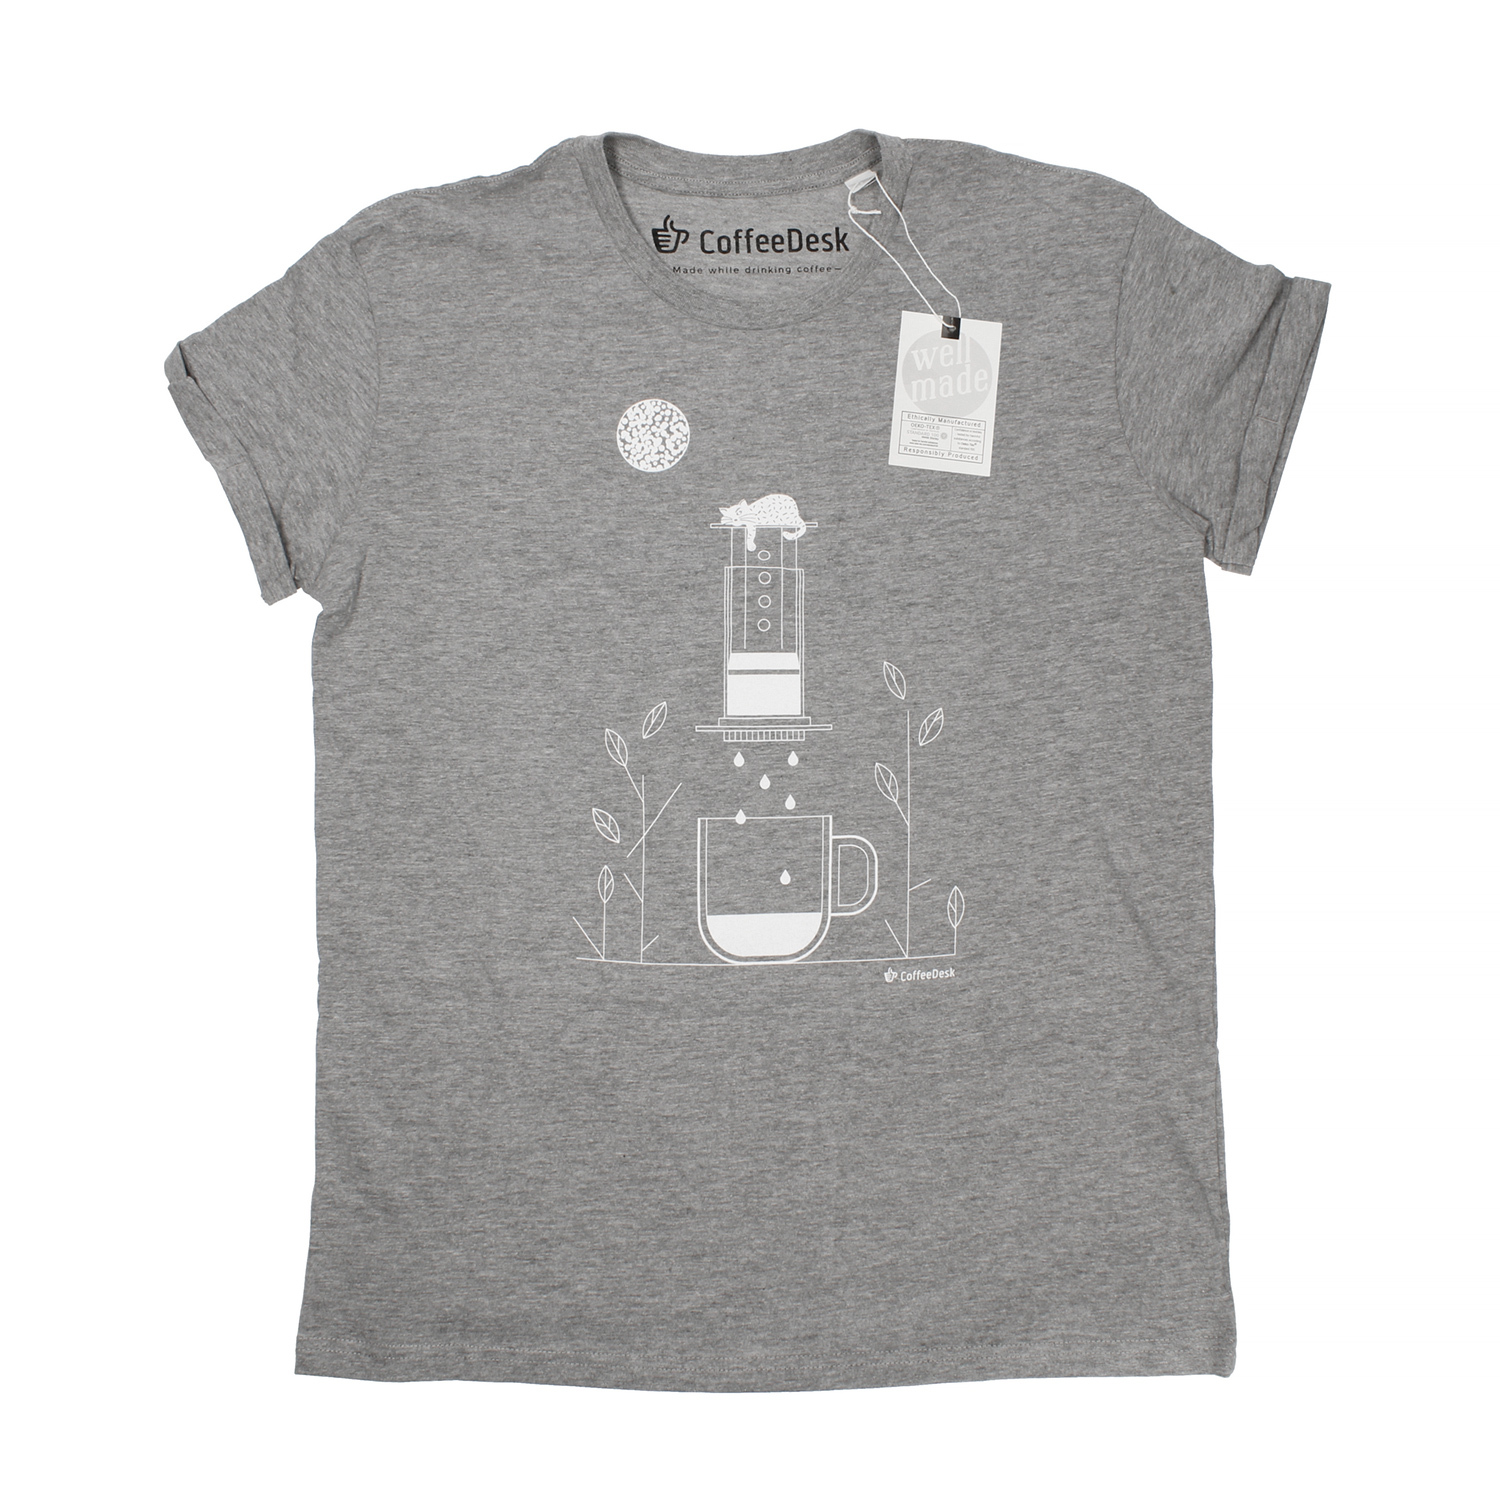 Coffeedesk AeroPress Men's Grey T-shirt - S